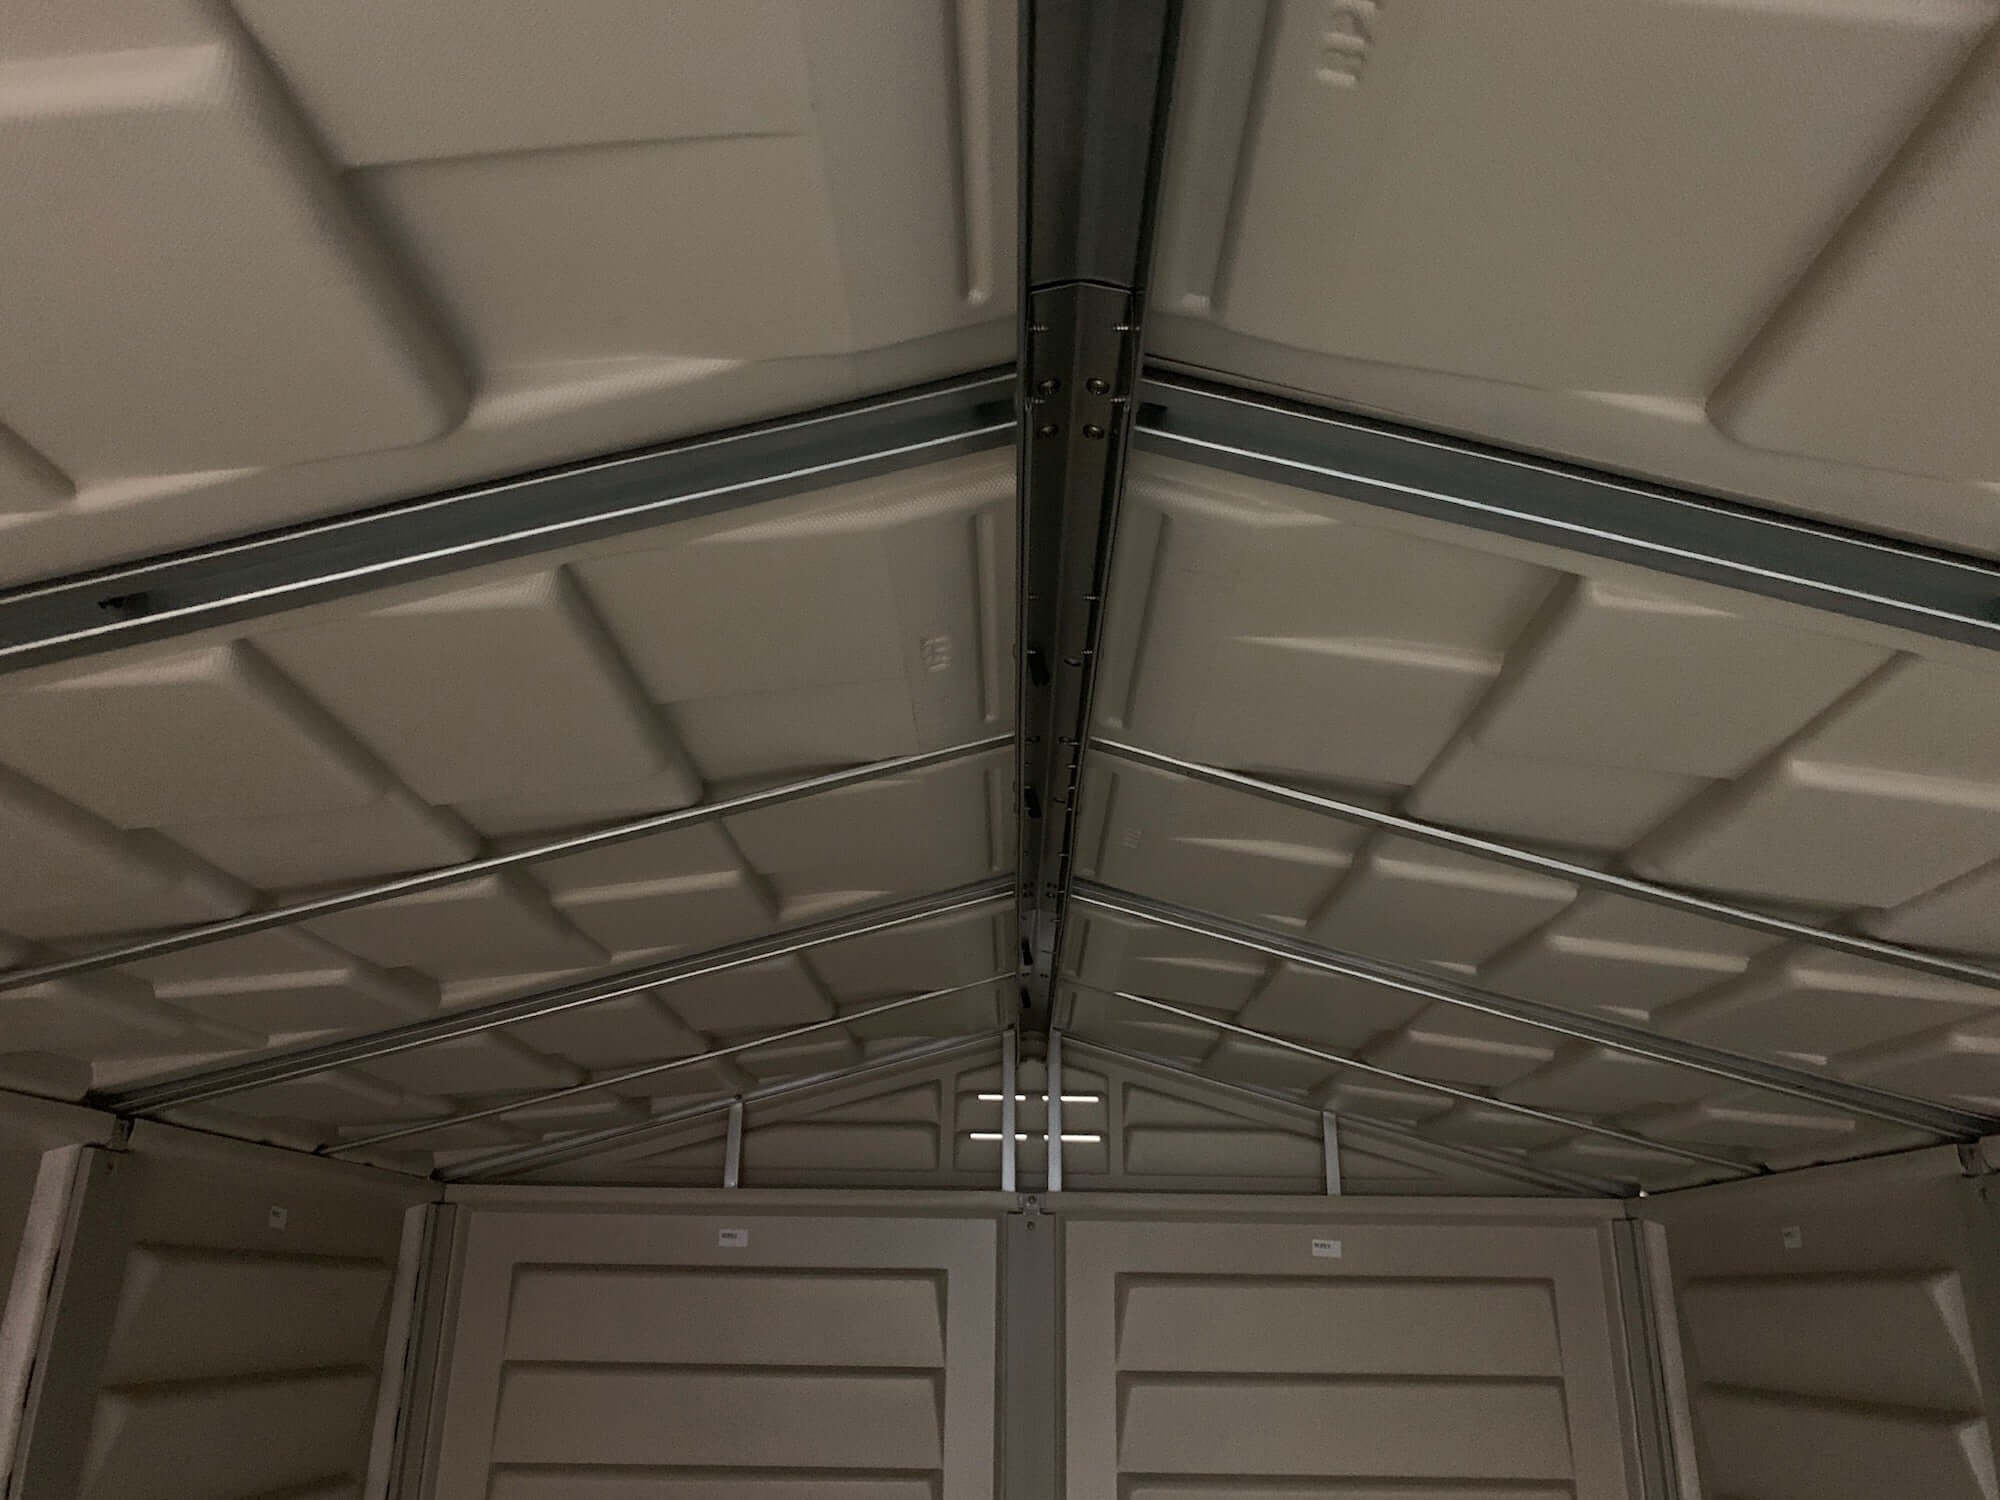 Duramax 5' x 8' YardMate Pent Plus w/floor 35825 interior ceiling seen from below